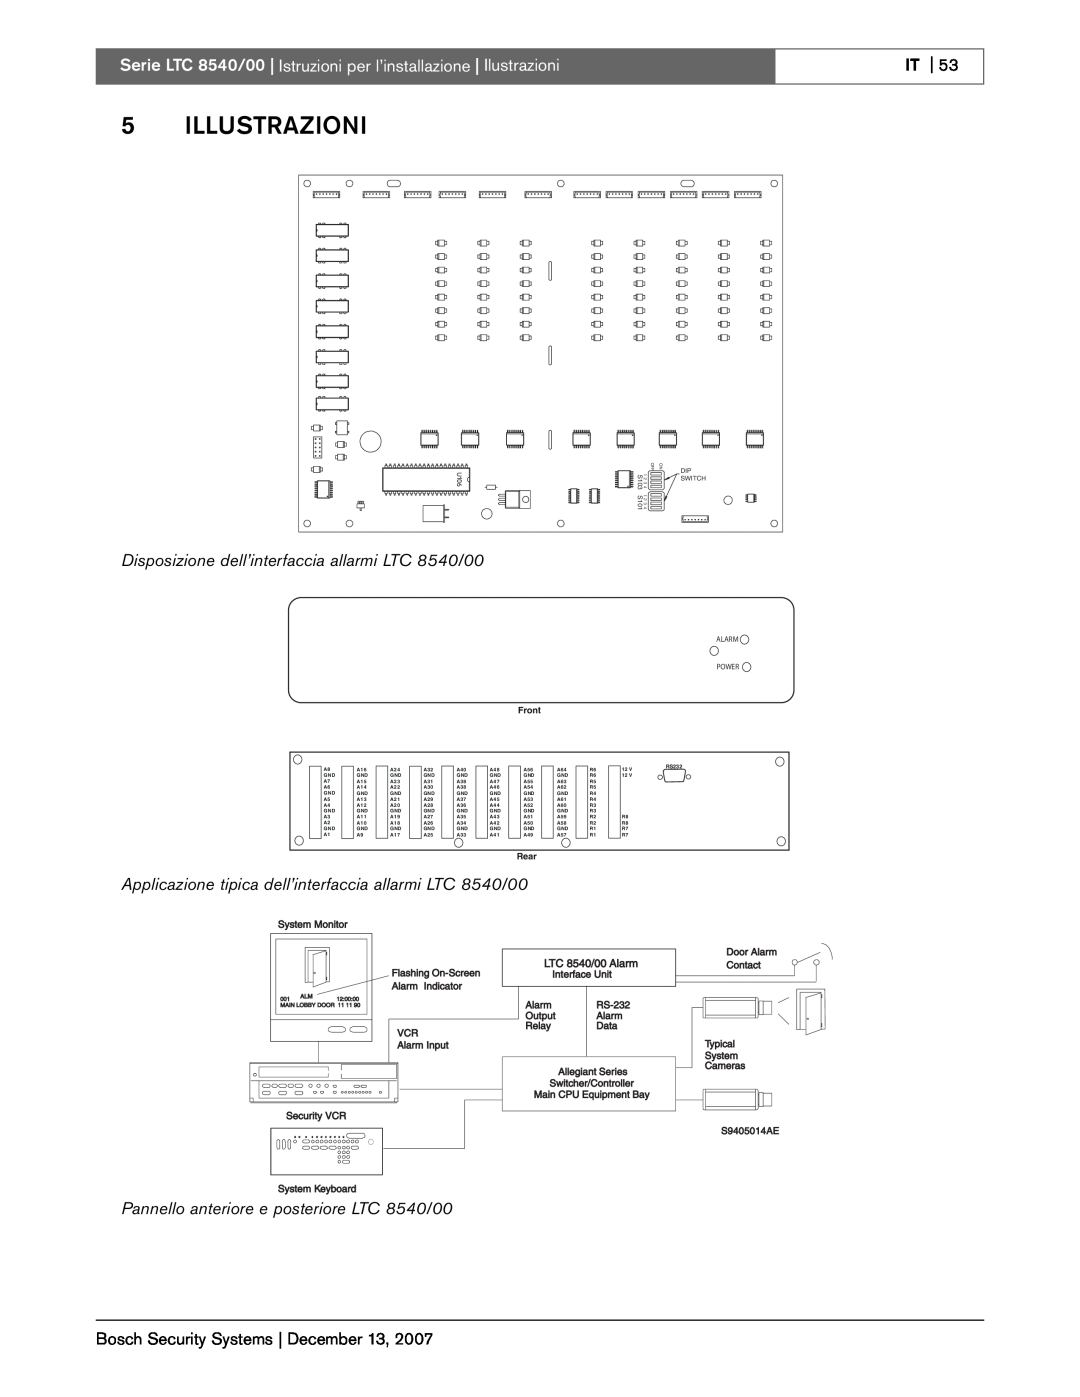 Bosch Appliances LTC 8540/00 instruction manual 5ILLUSTRAZIONI, It, Bosch Security Systems December 